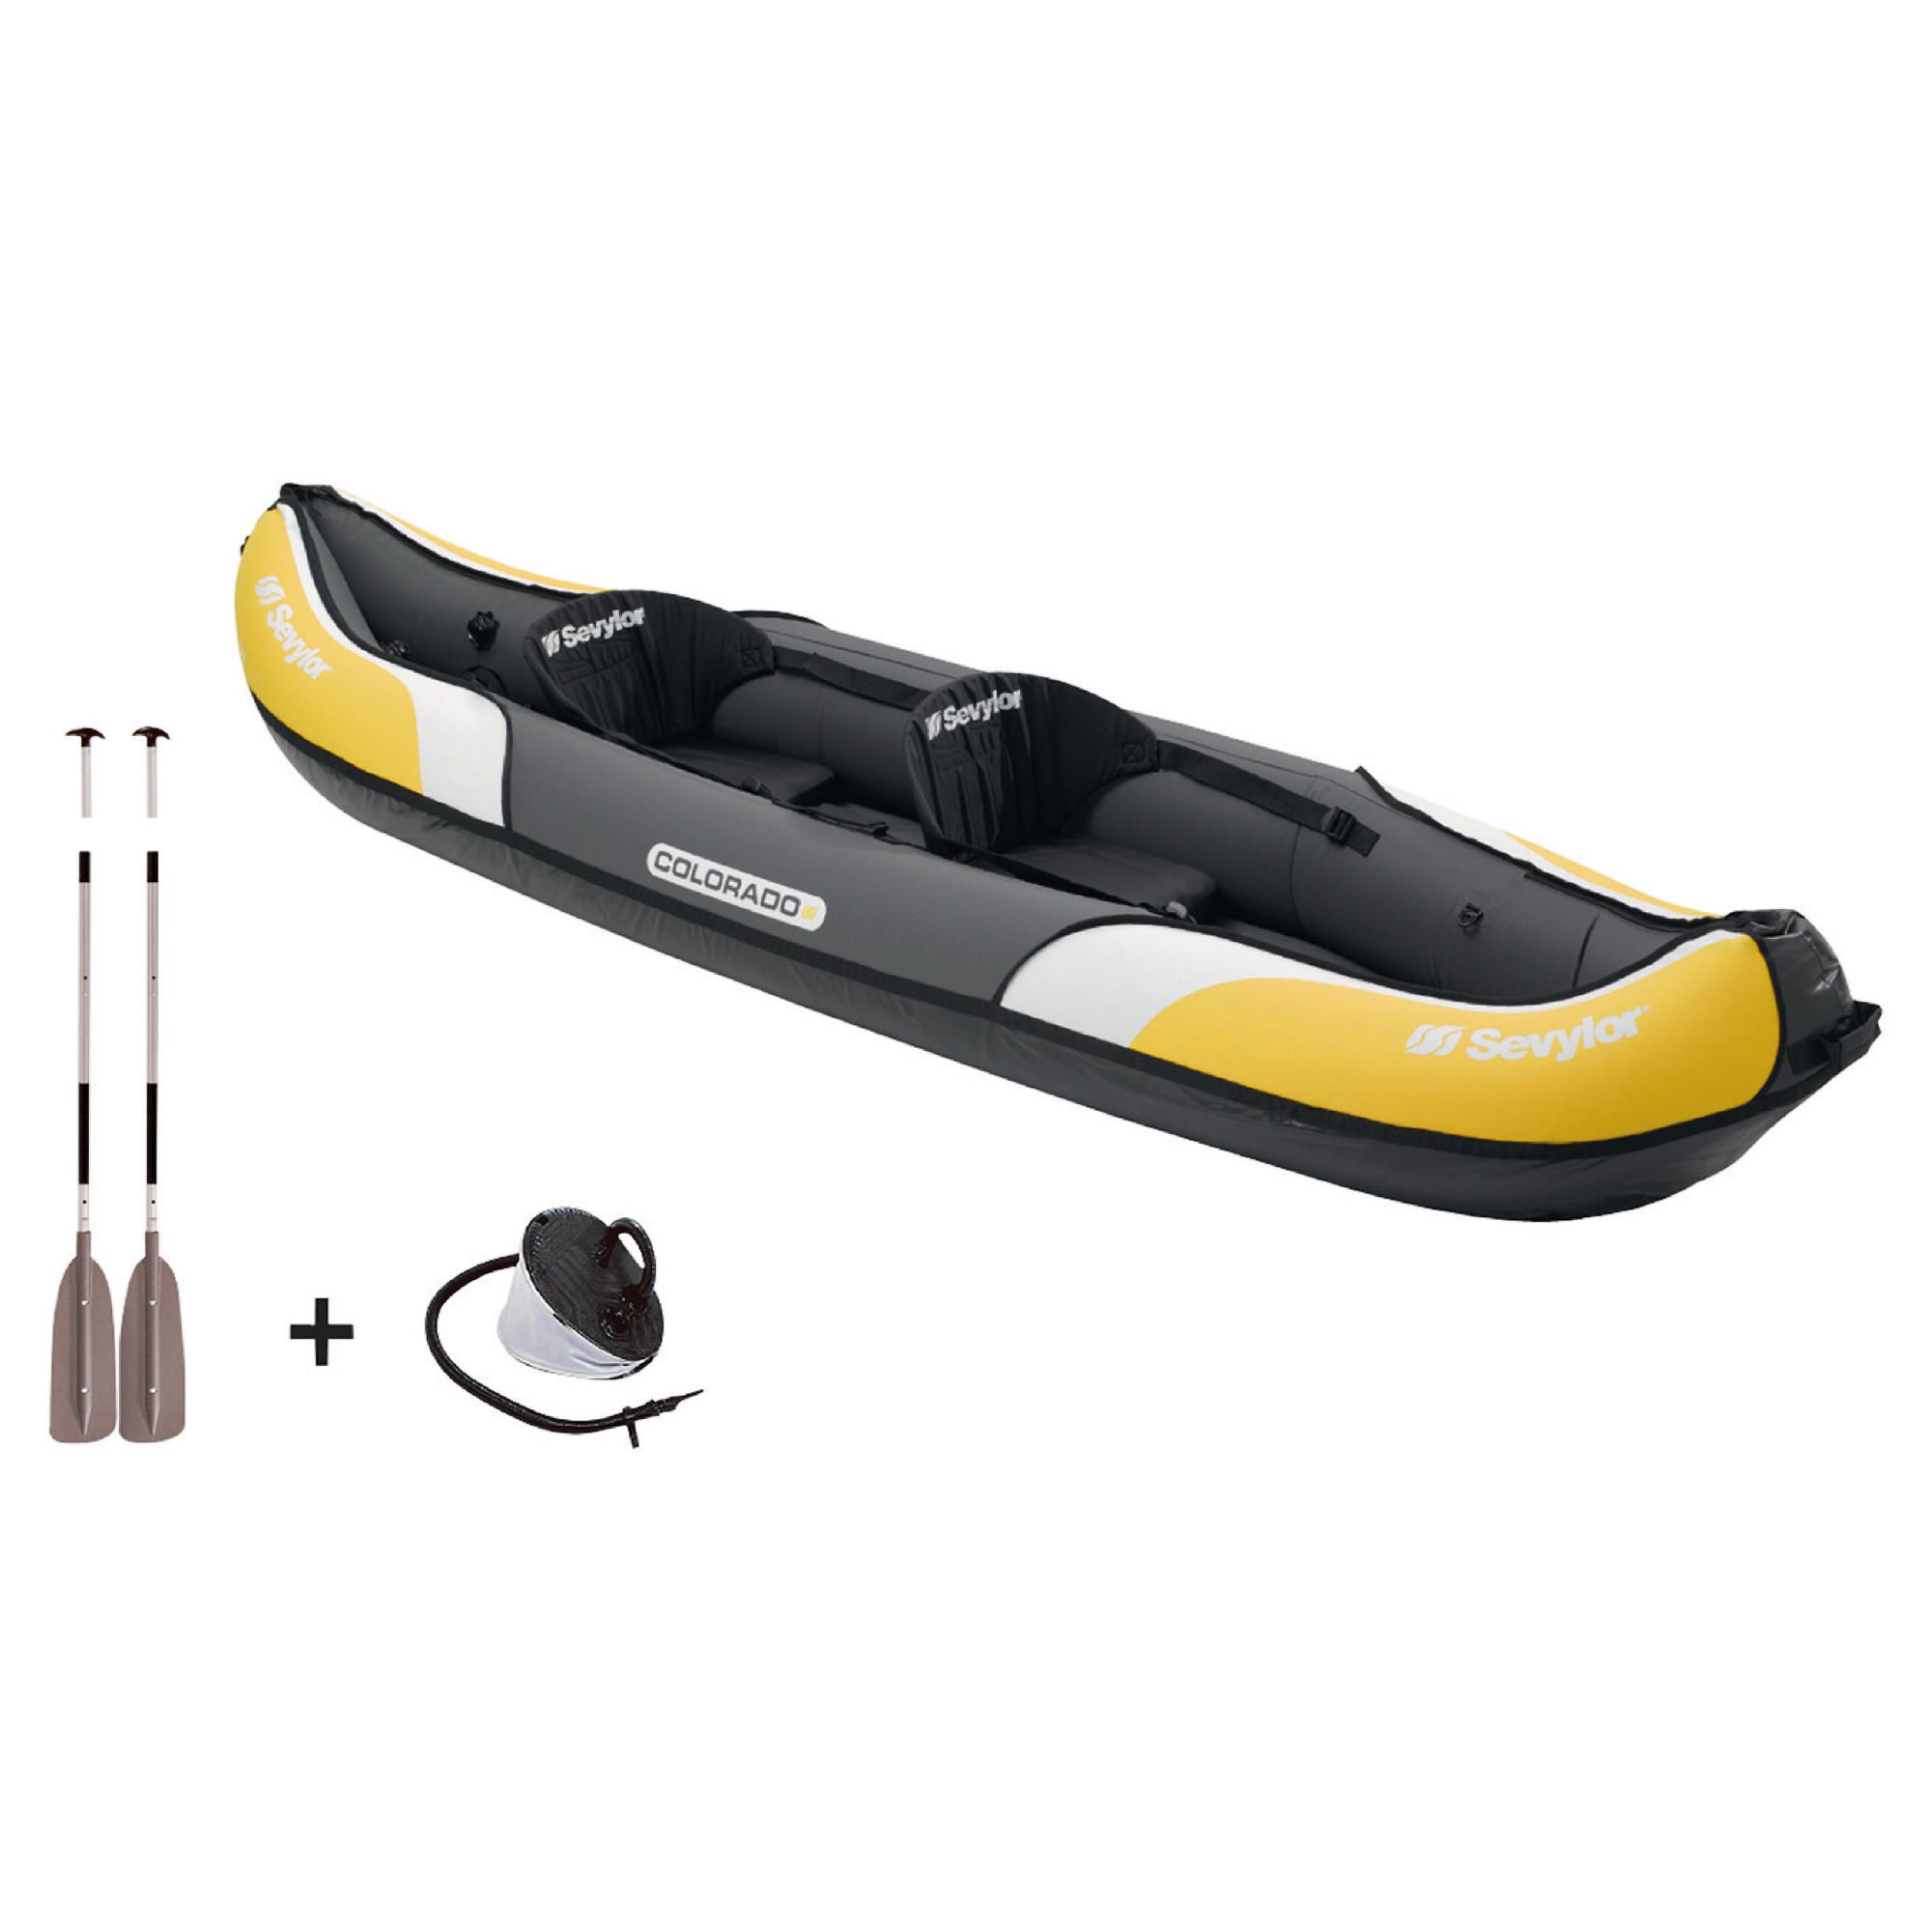 Sevylor Colorado Canoe Kit with Paddles at Tesco Direct